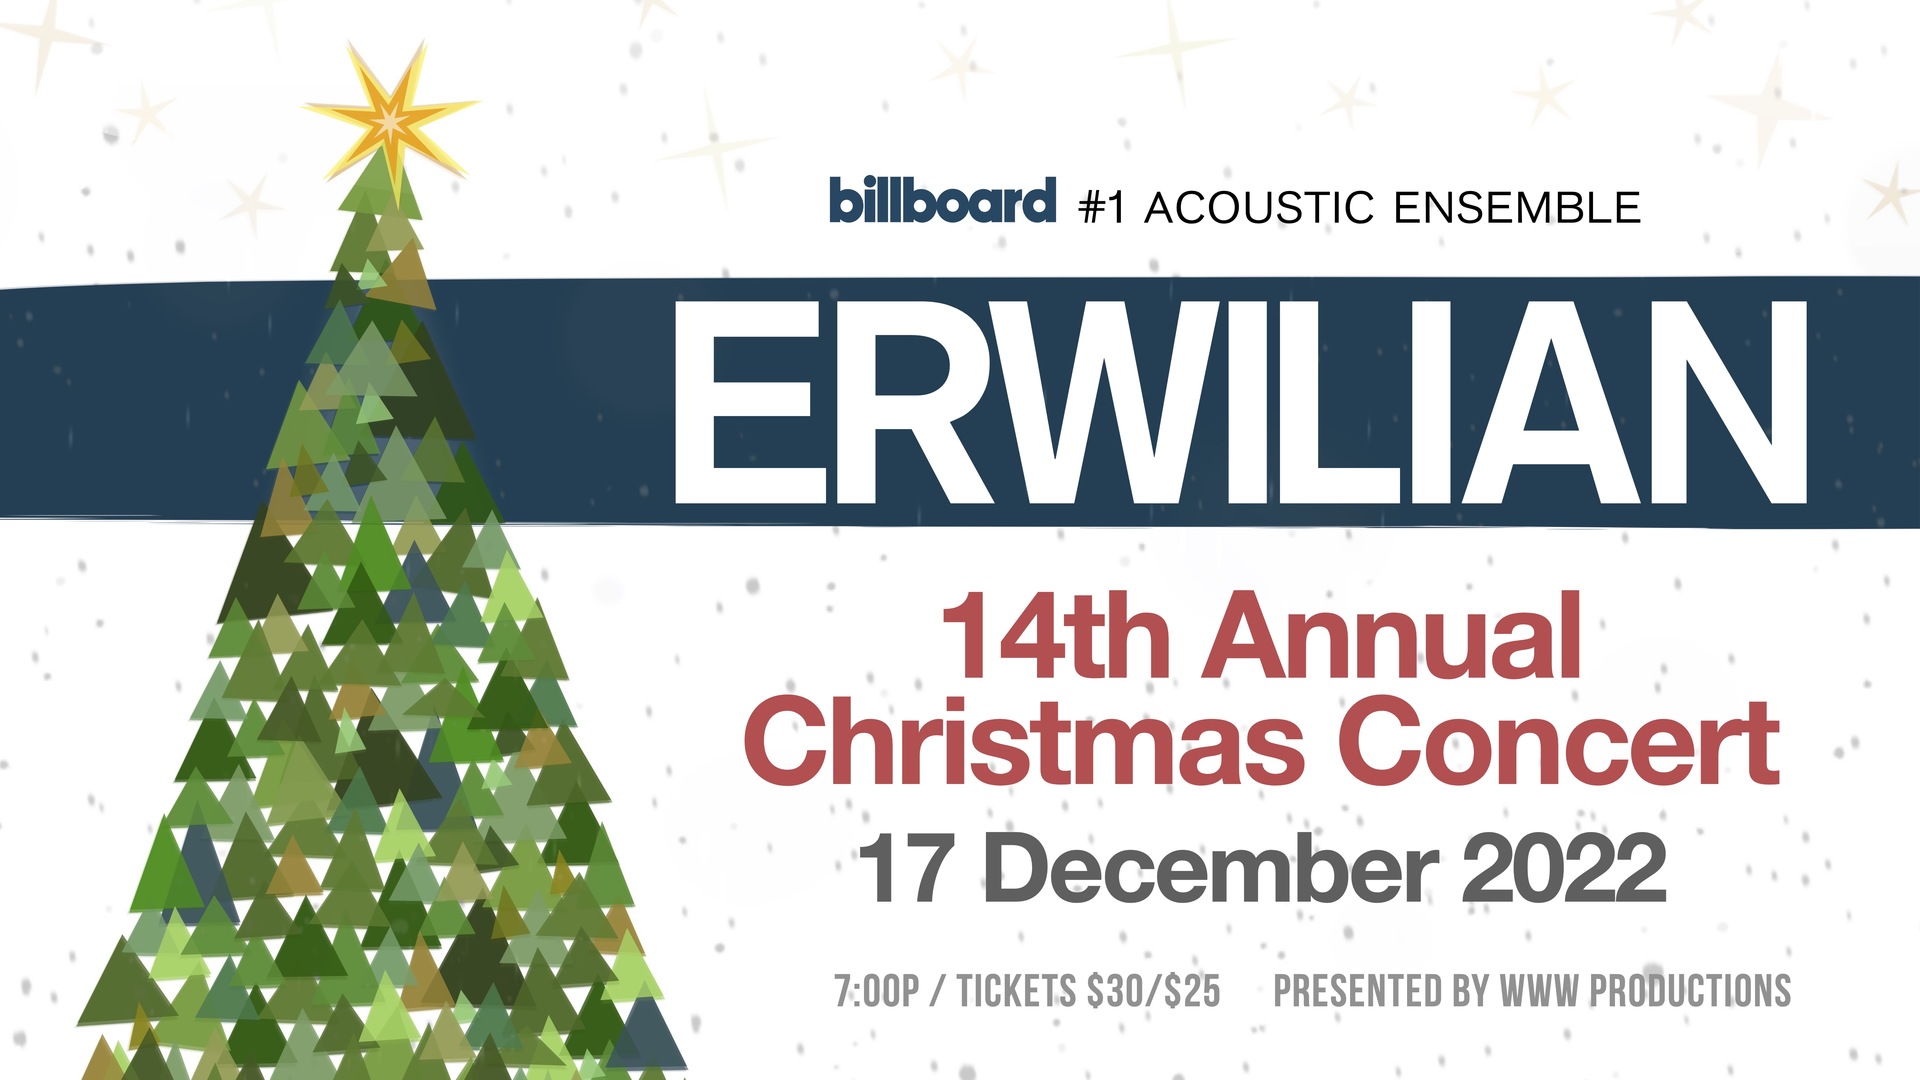 Erwilian: 14th Annual Christmas Concert, Kent, Washington, United States